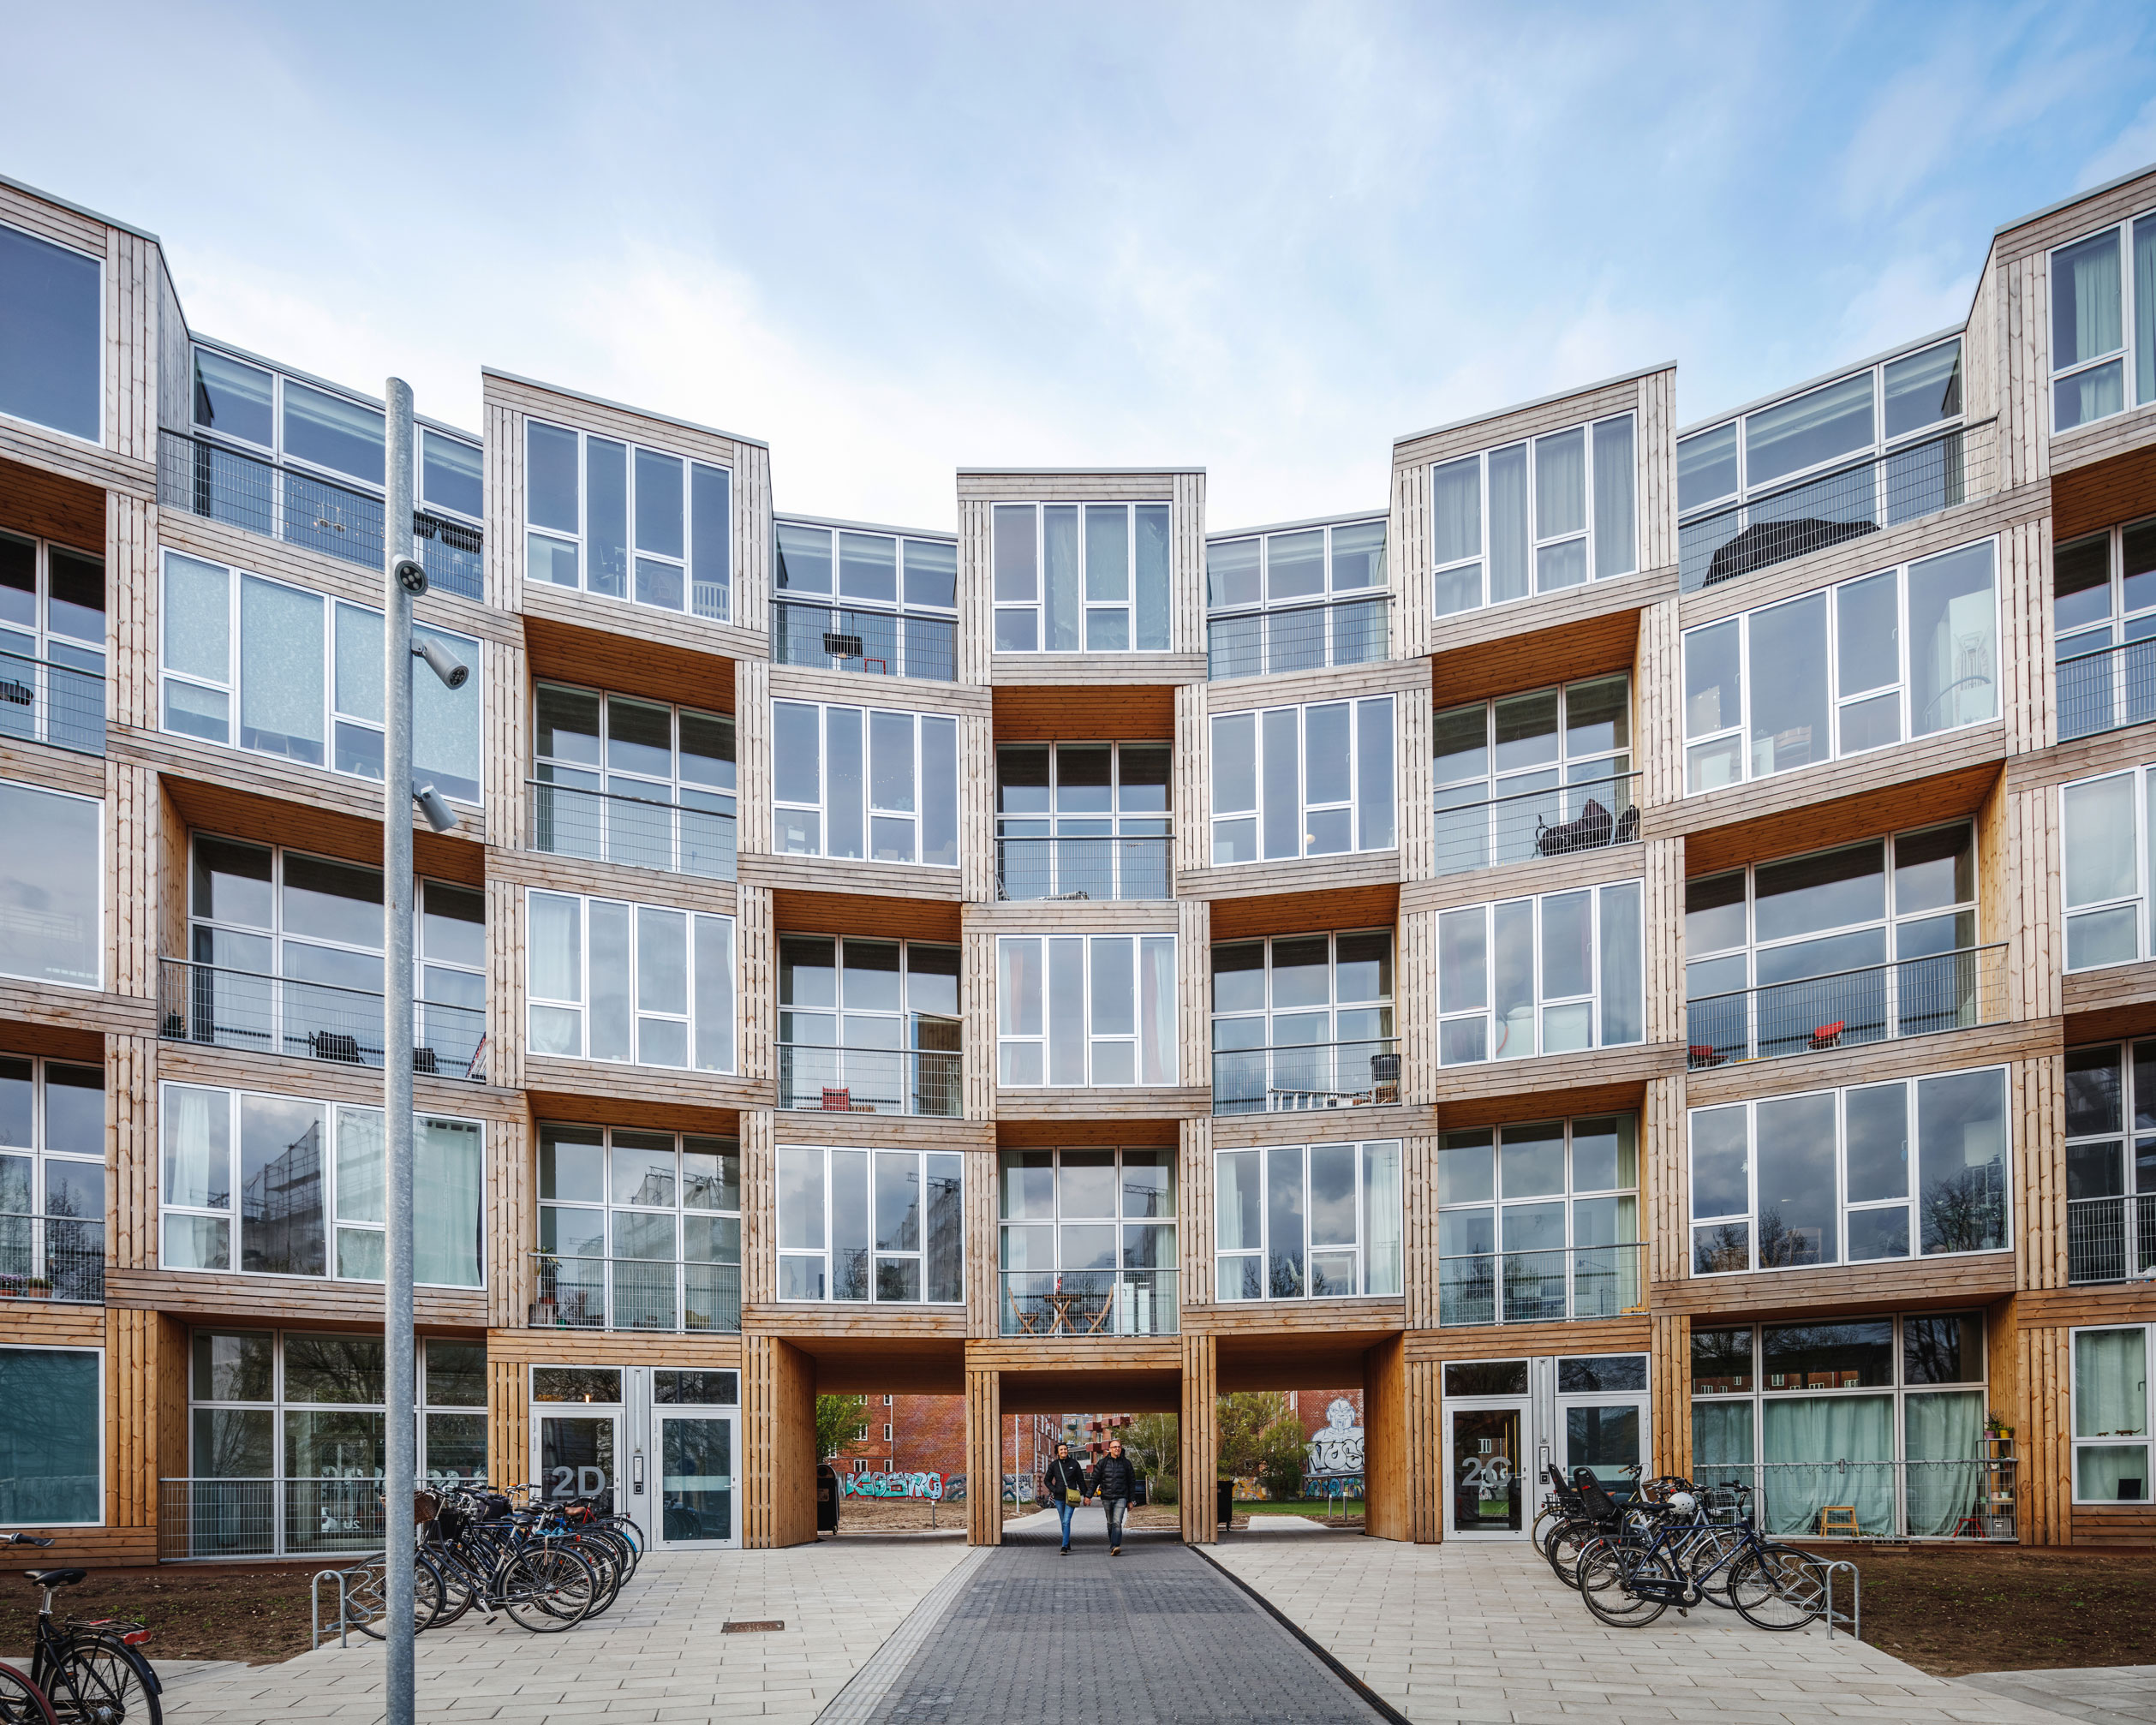 Modular Constructed Affordable Housing in Copenhagen